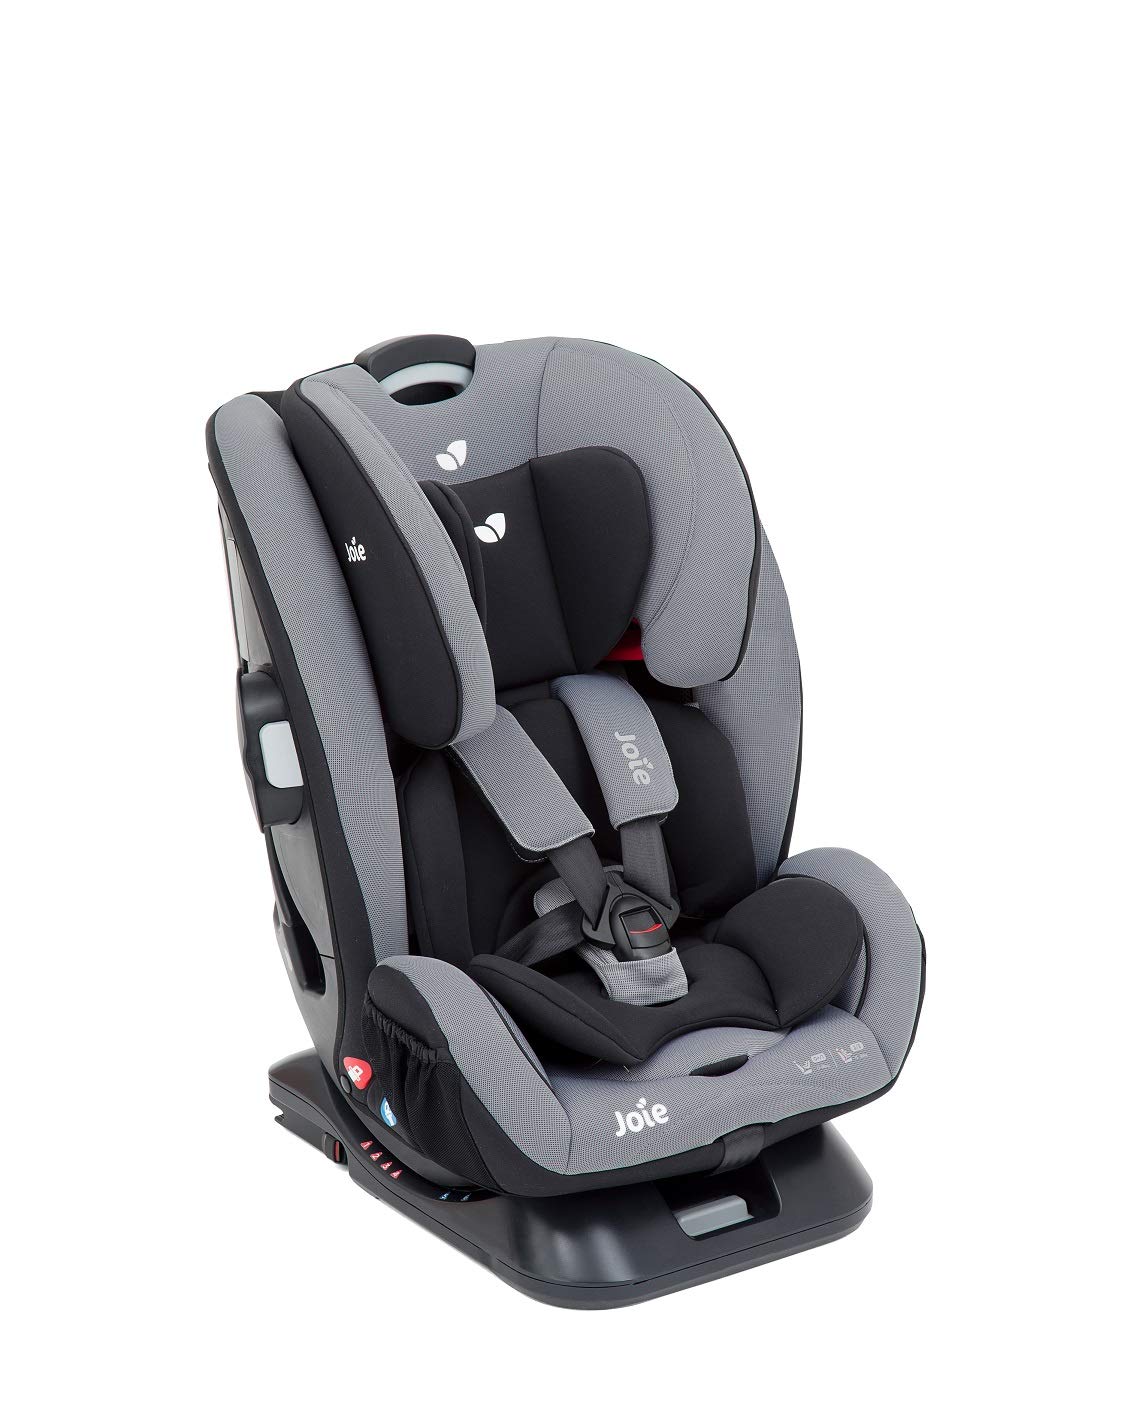 Joie Verso Slate Child Car Seat